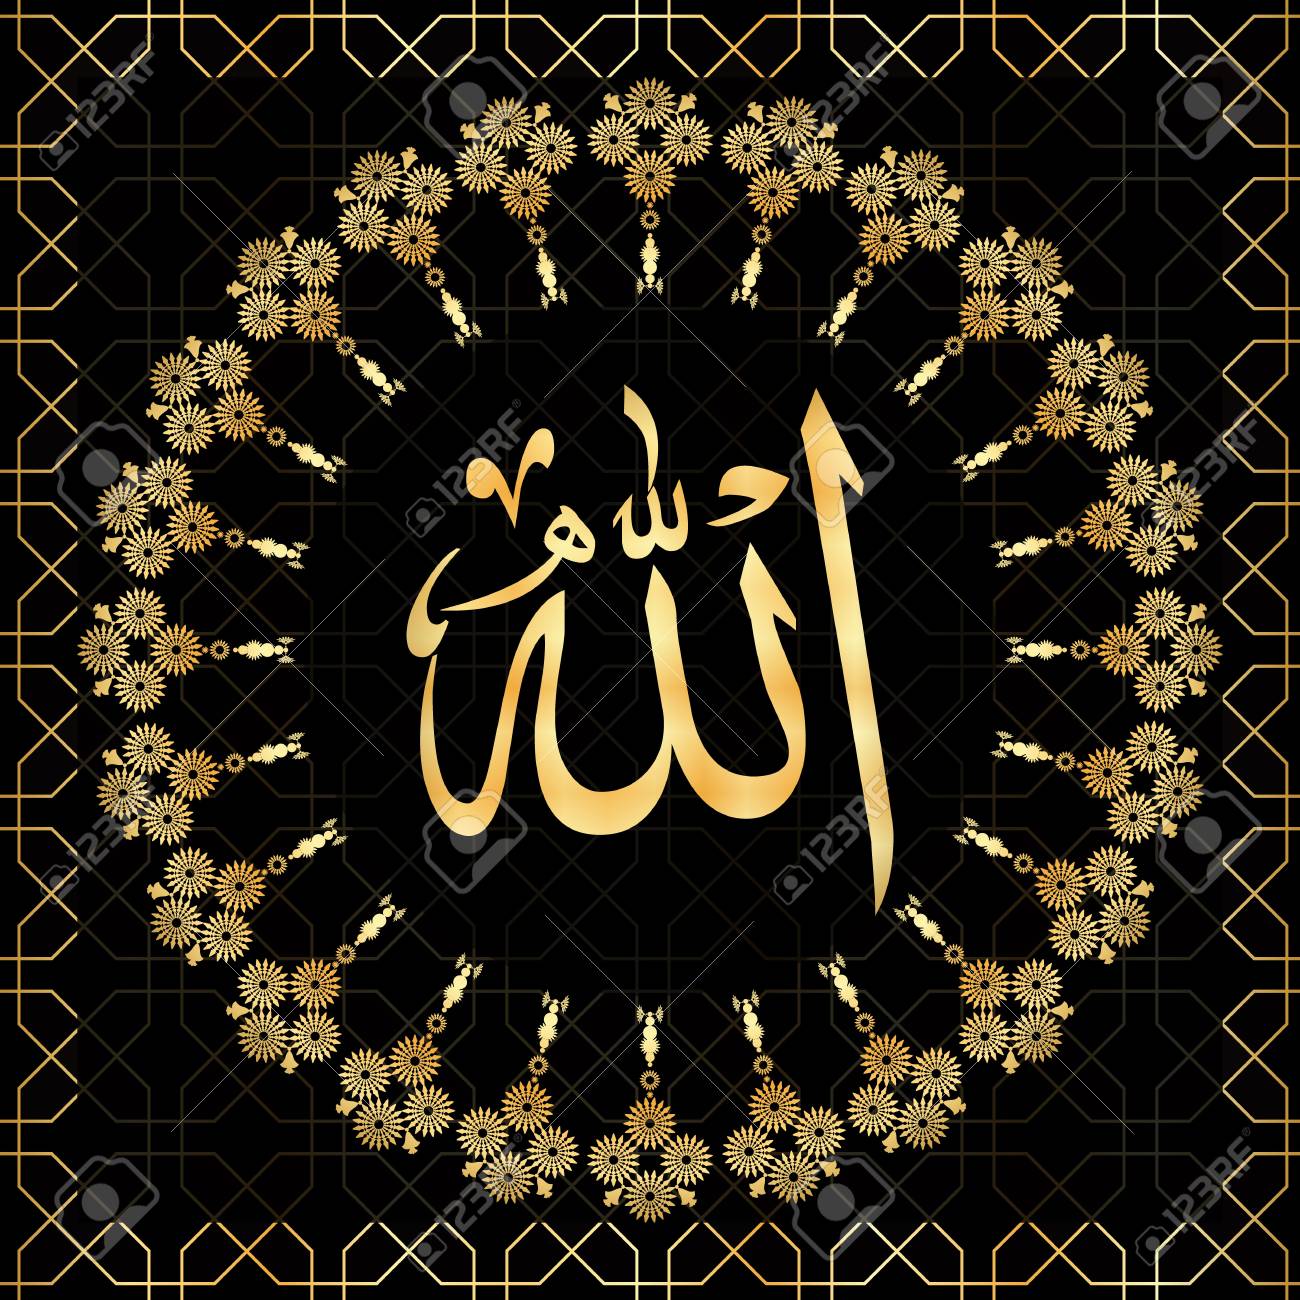 100367417-allah-translation-in-the-name-of-god-dark-ang-golden-background-geometrical-islamic-motif-or-ornamen.jpg